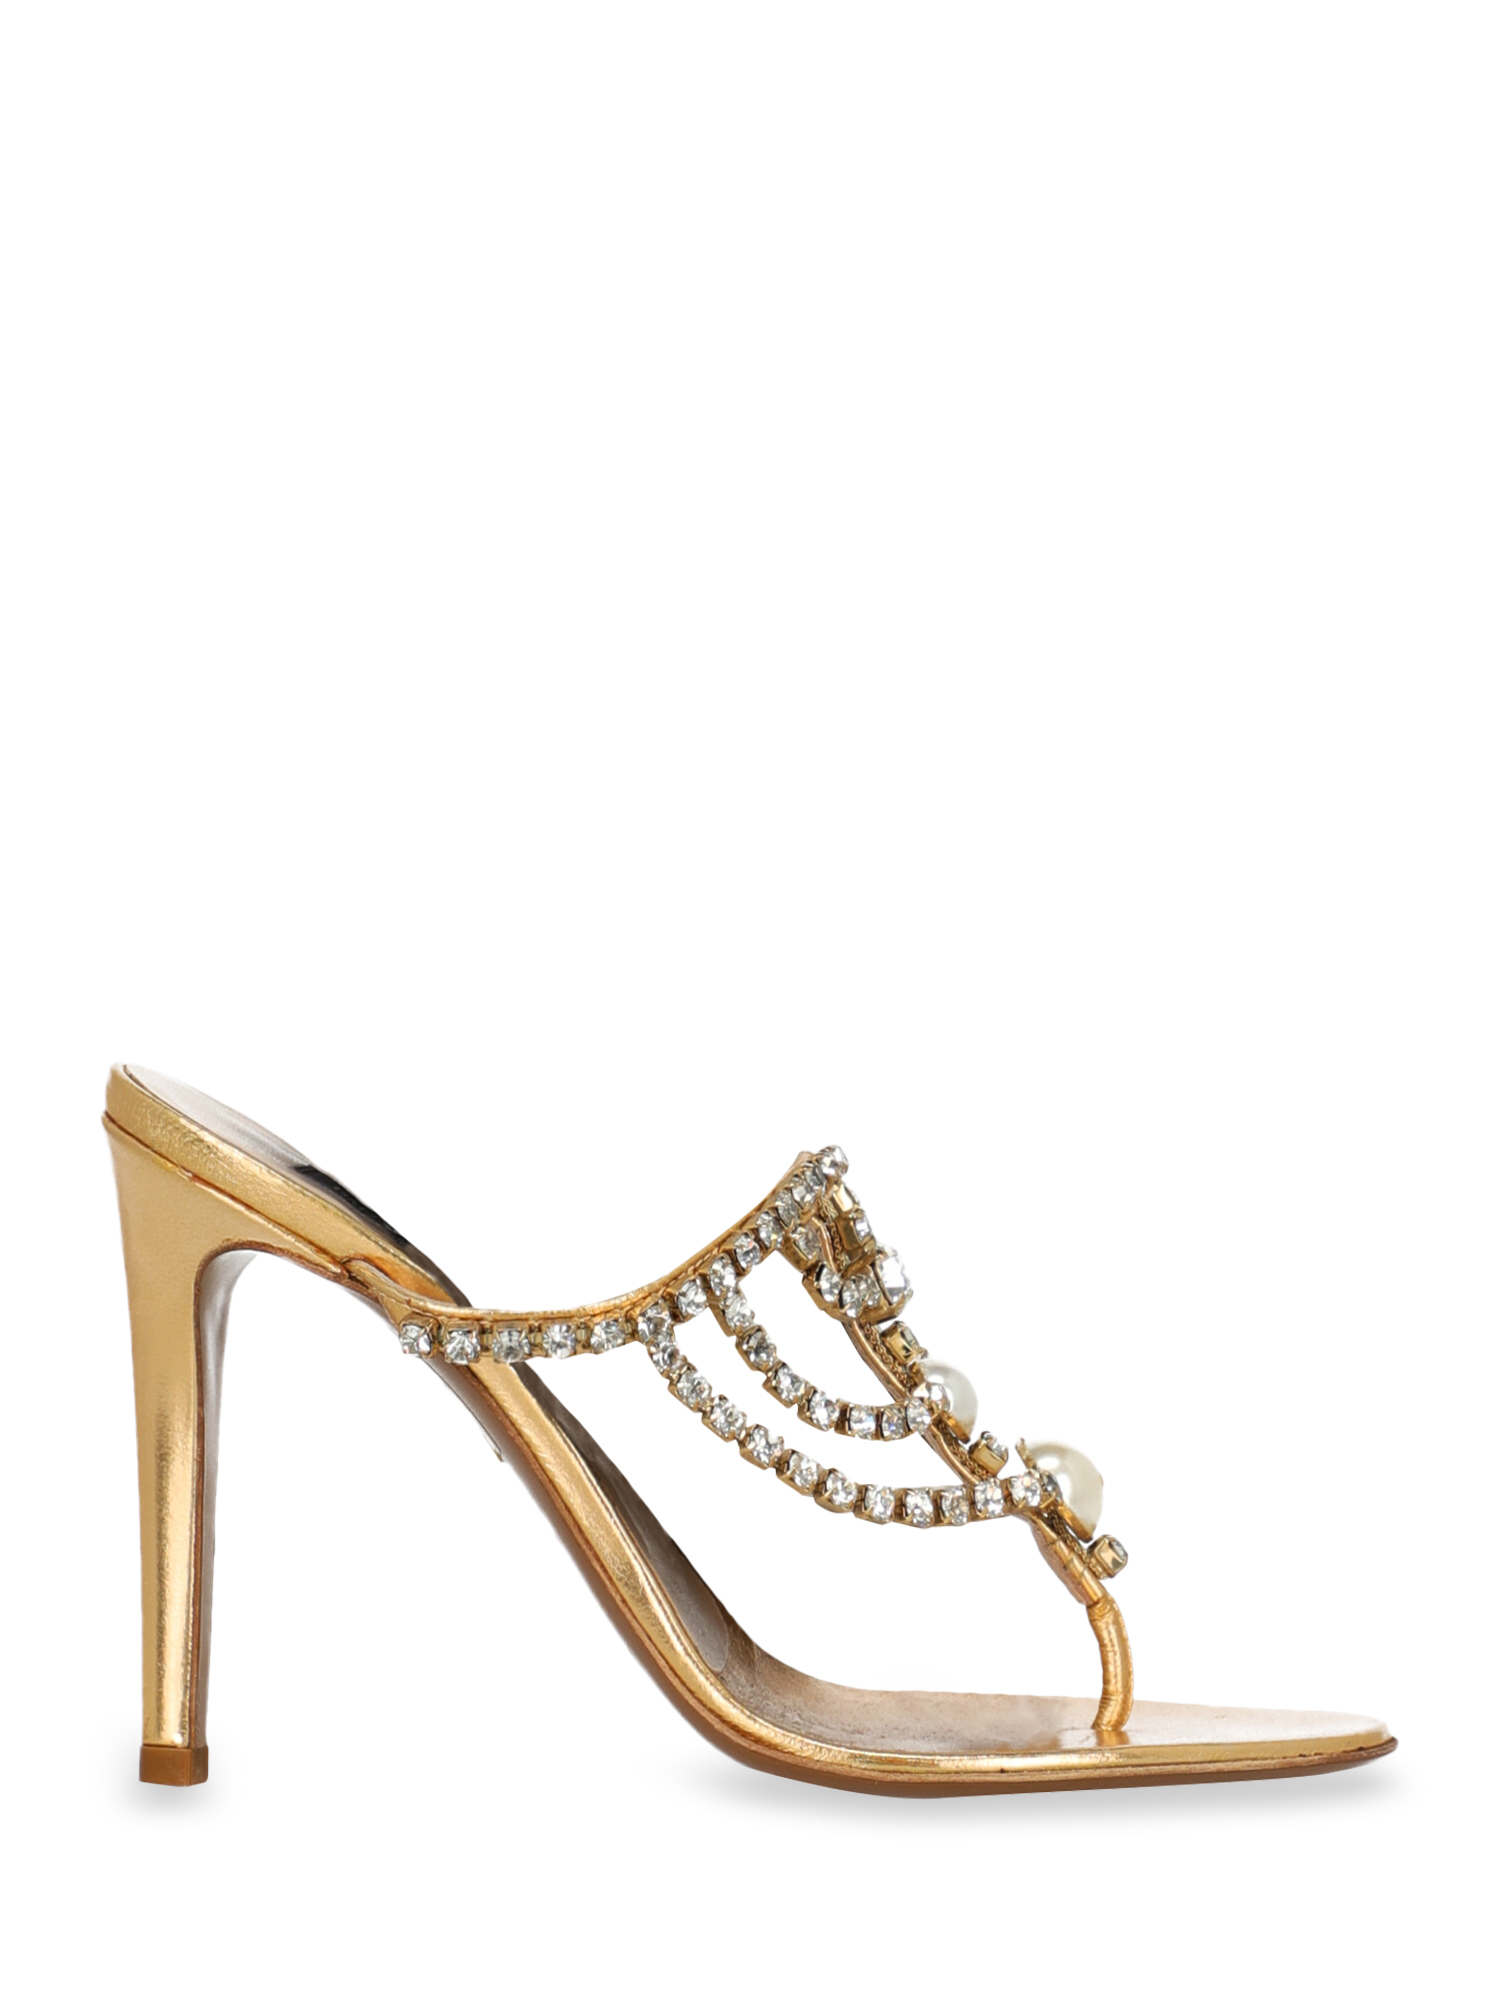 Emilio Pucci Femme Sandales Gold Leather